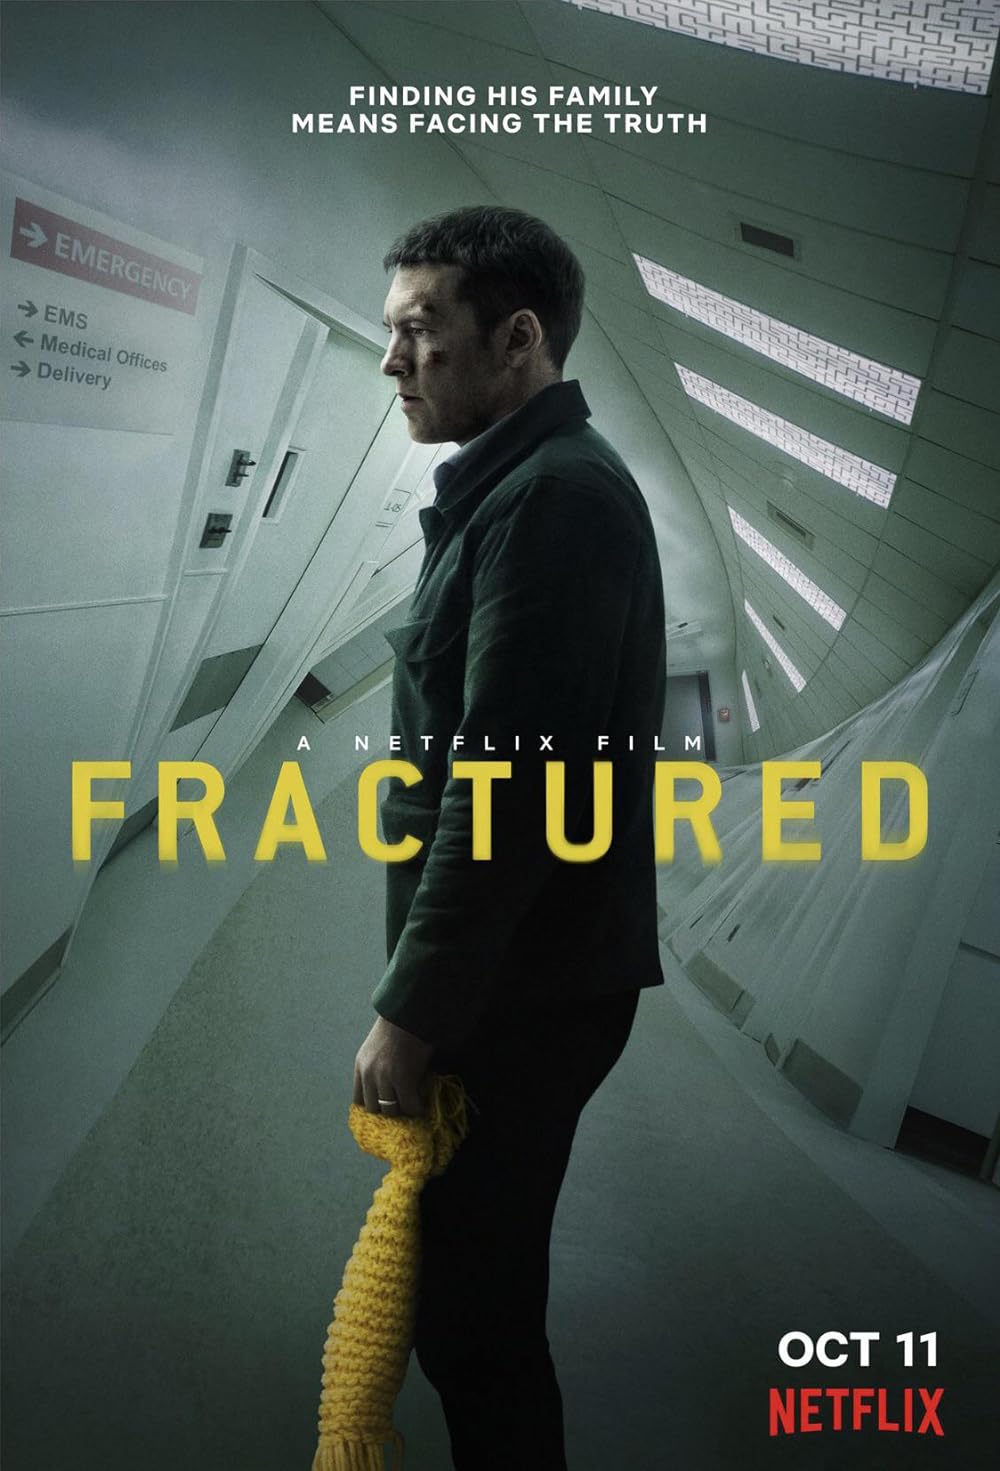 FULL MOVIE: Fractured (2019)